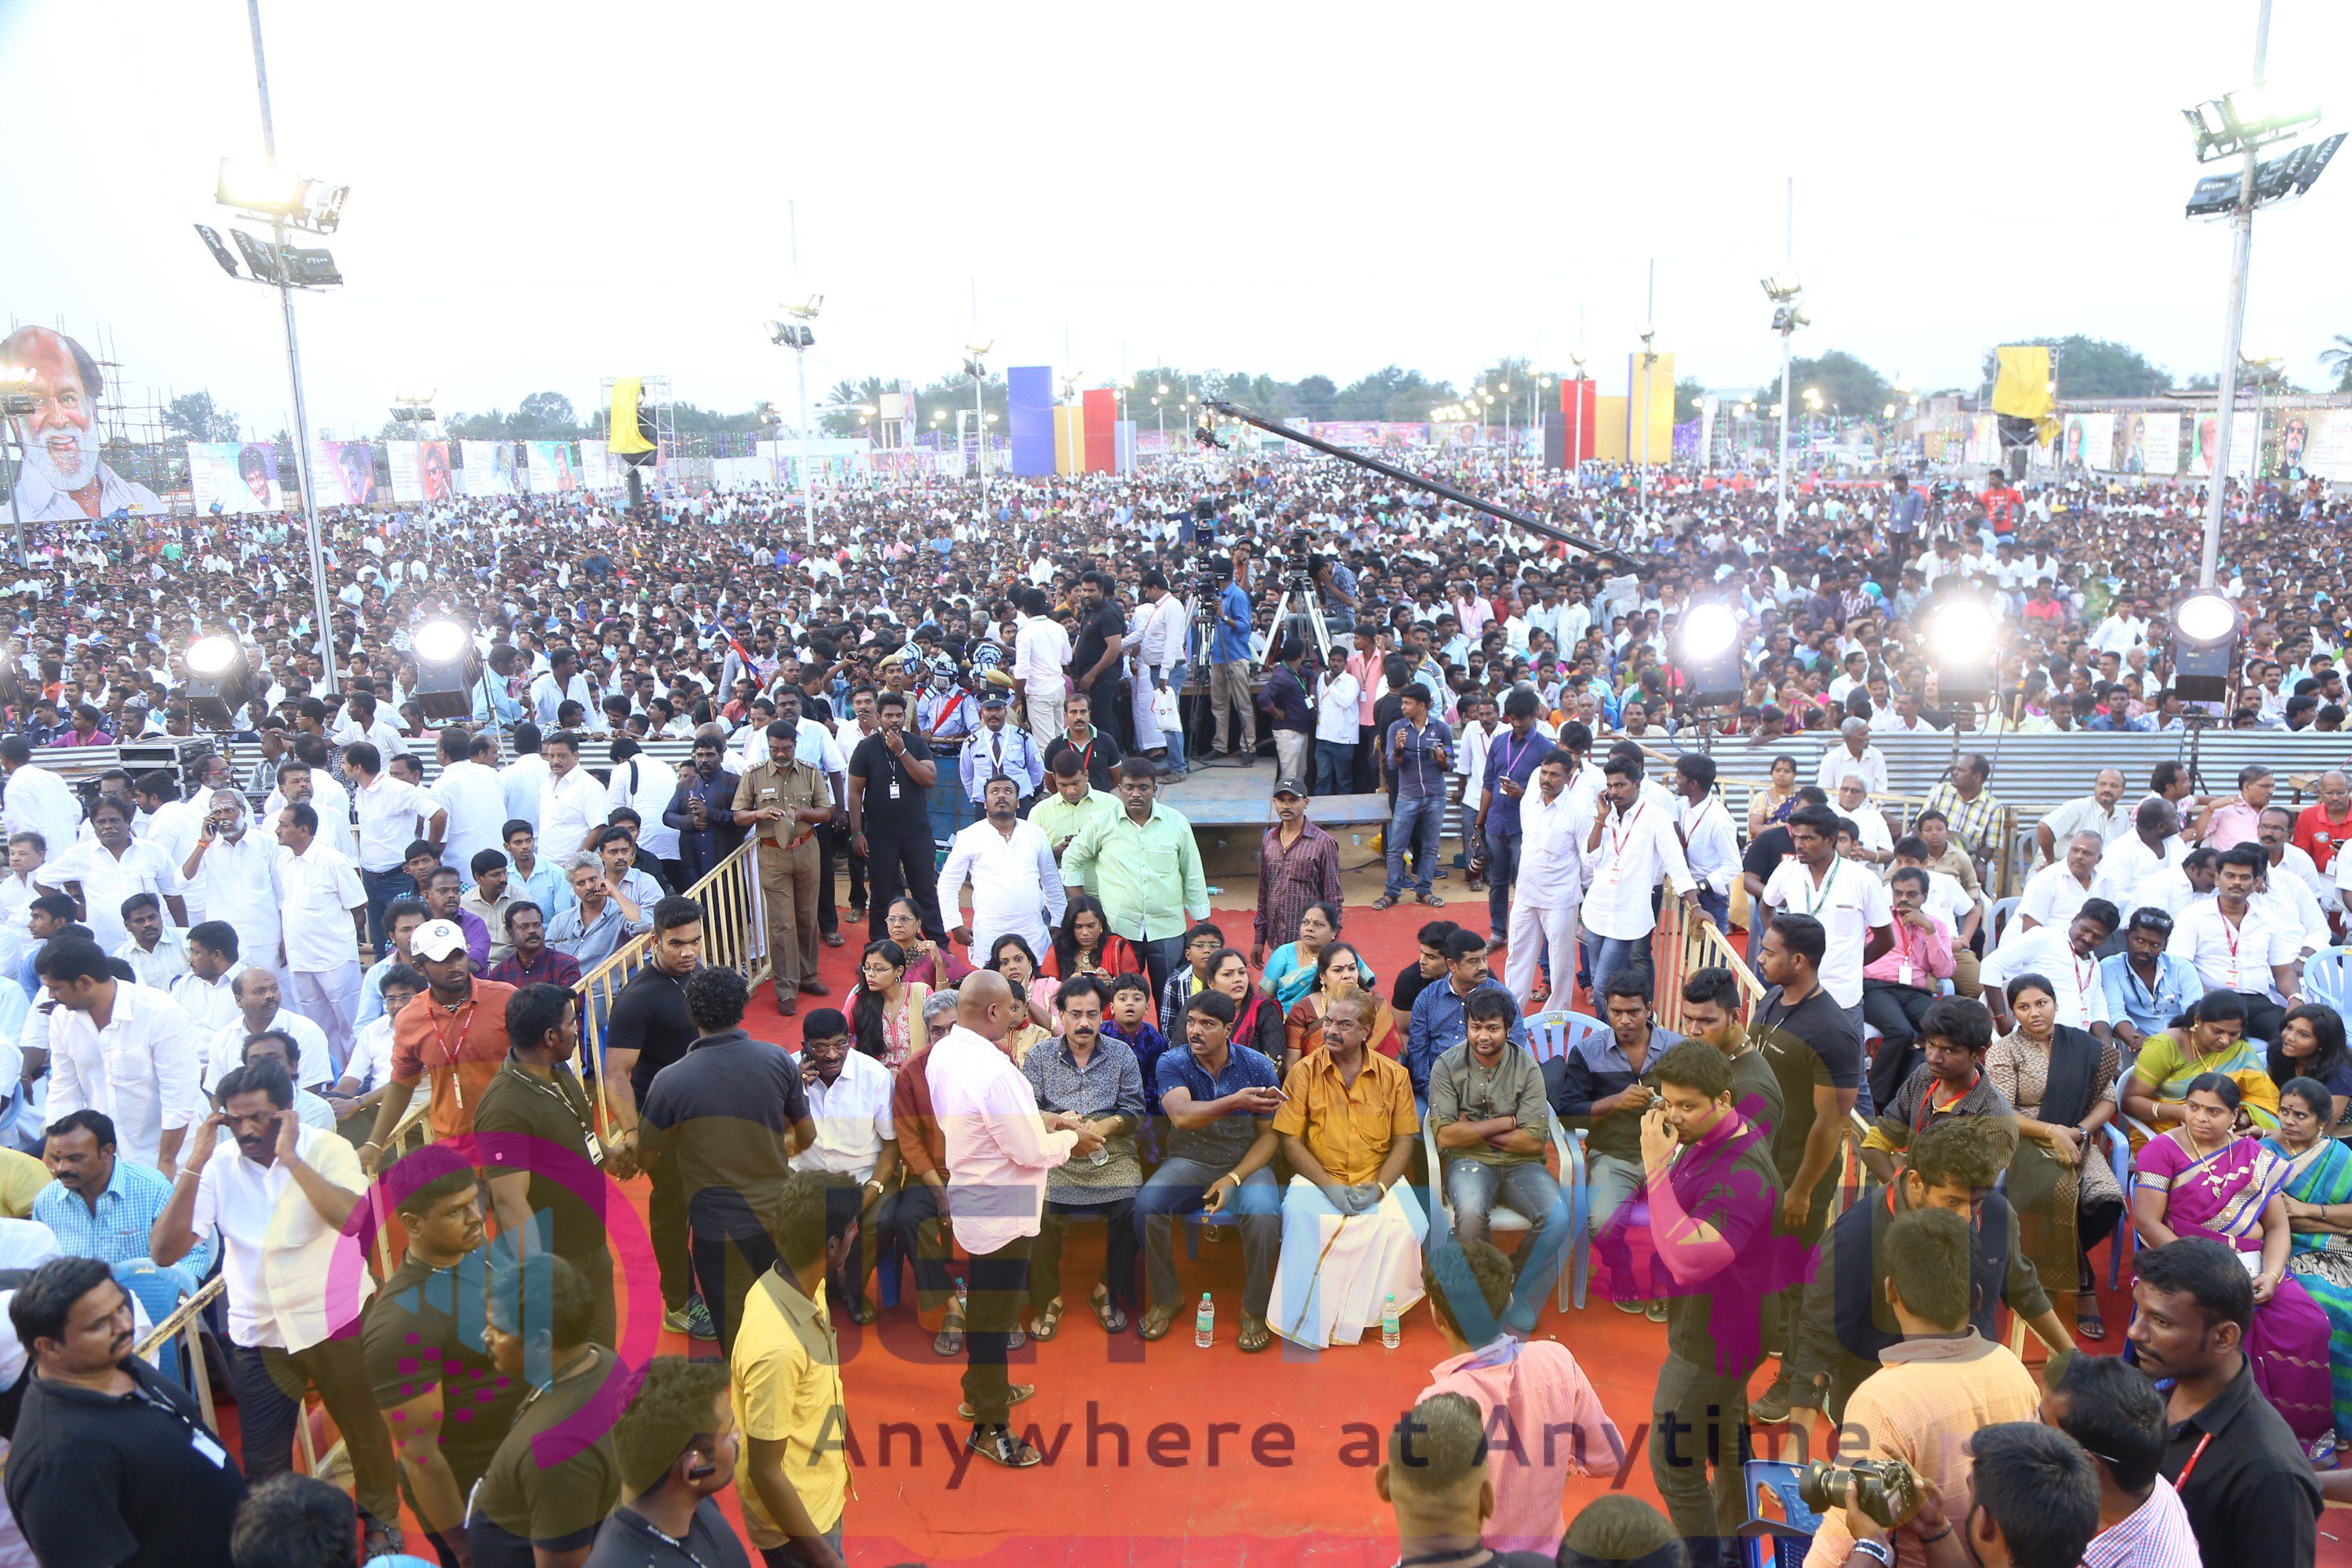 malarattum manithaneyam event photos by rajinikanth fans 1